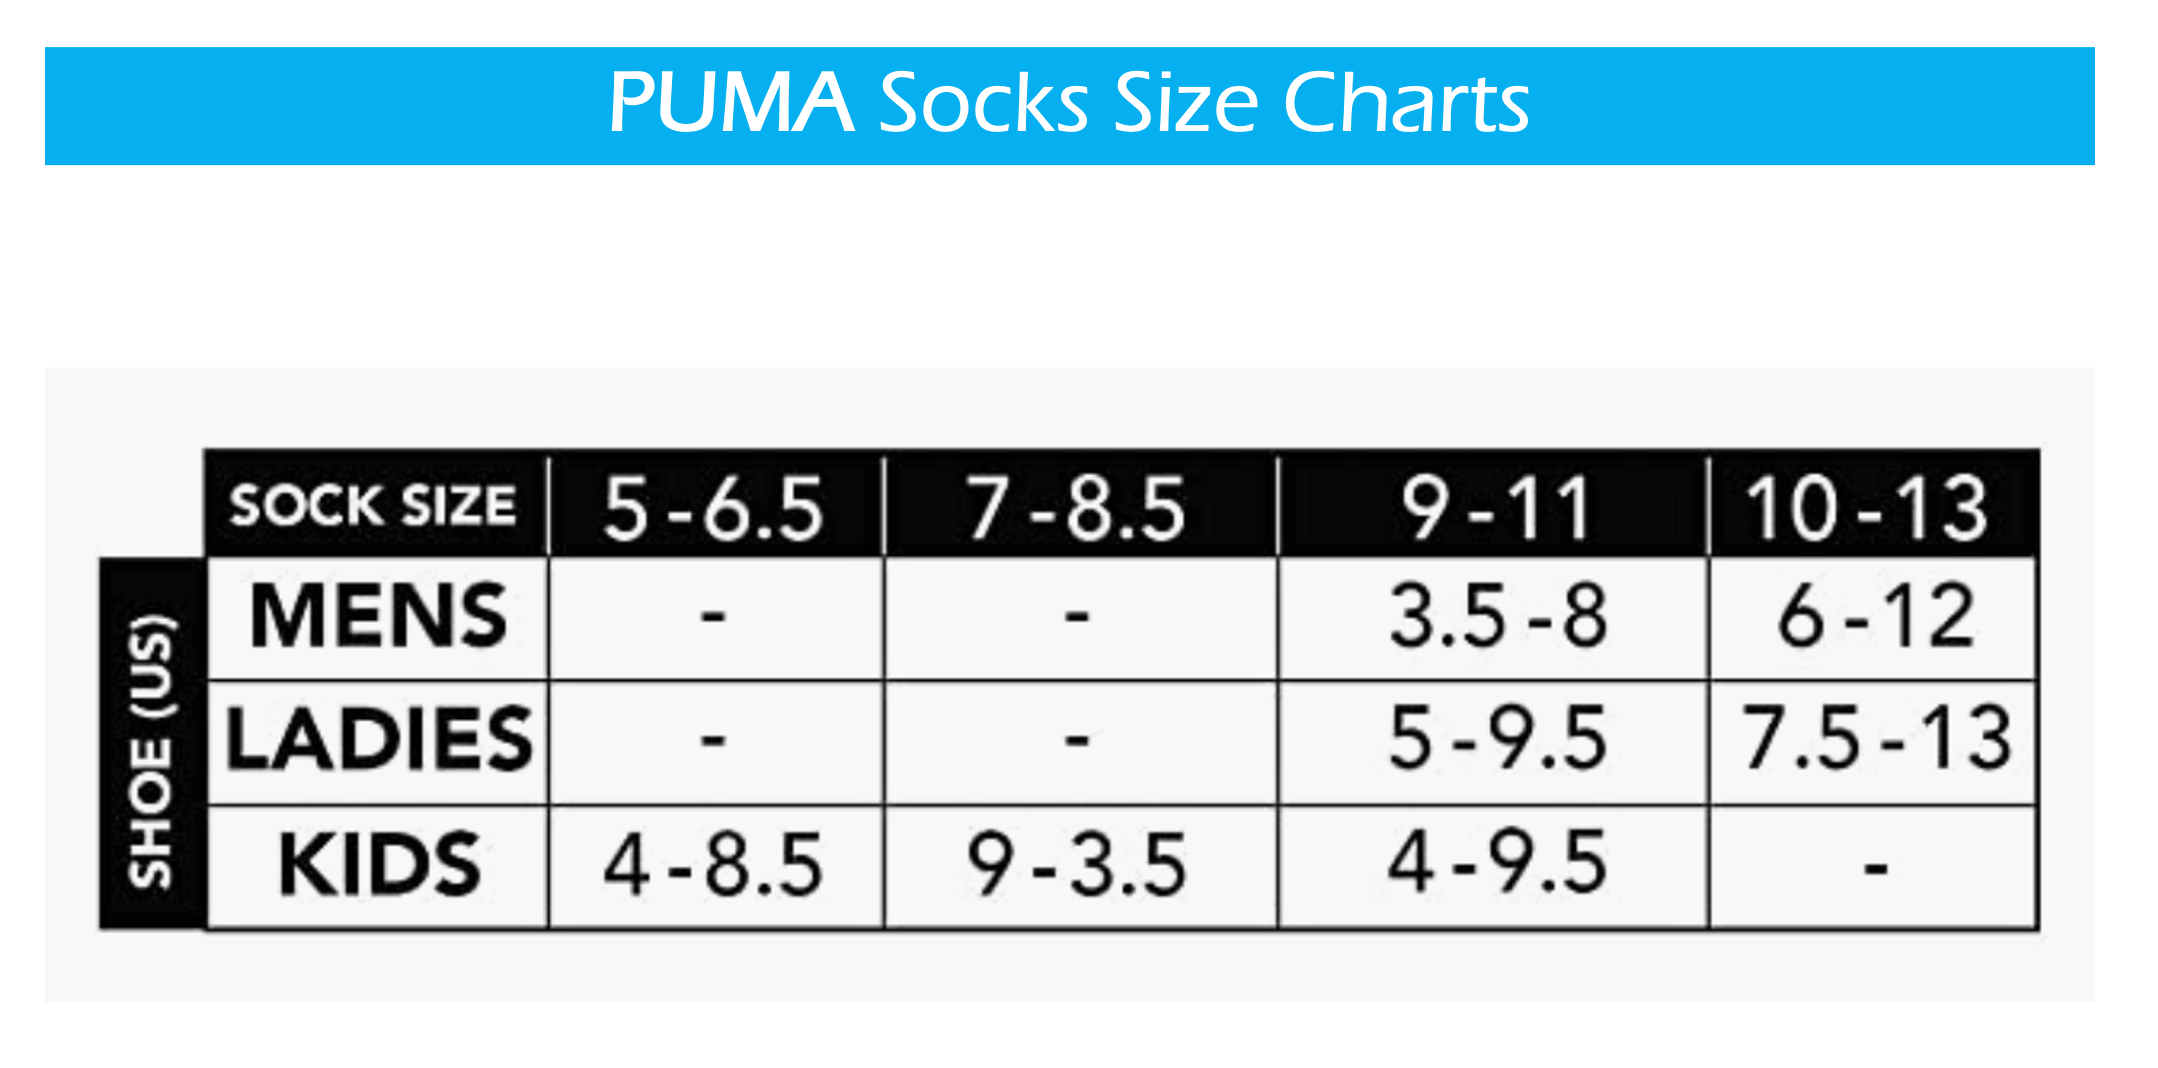 Champion Men's 6 Pair Low Cut Socks, White, 10-13 (Shoe Size 6-12) :  : Clothing, Shoes & Accessories